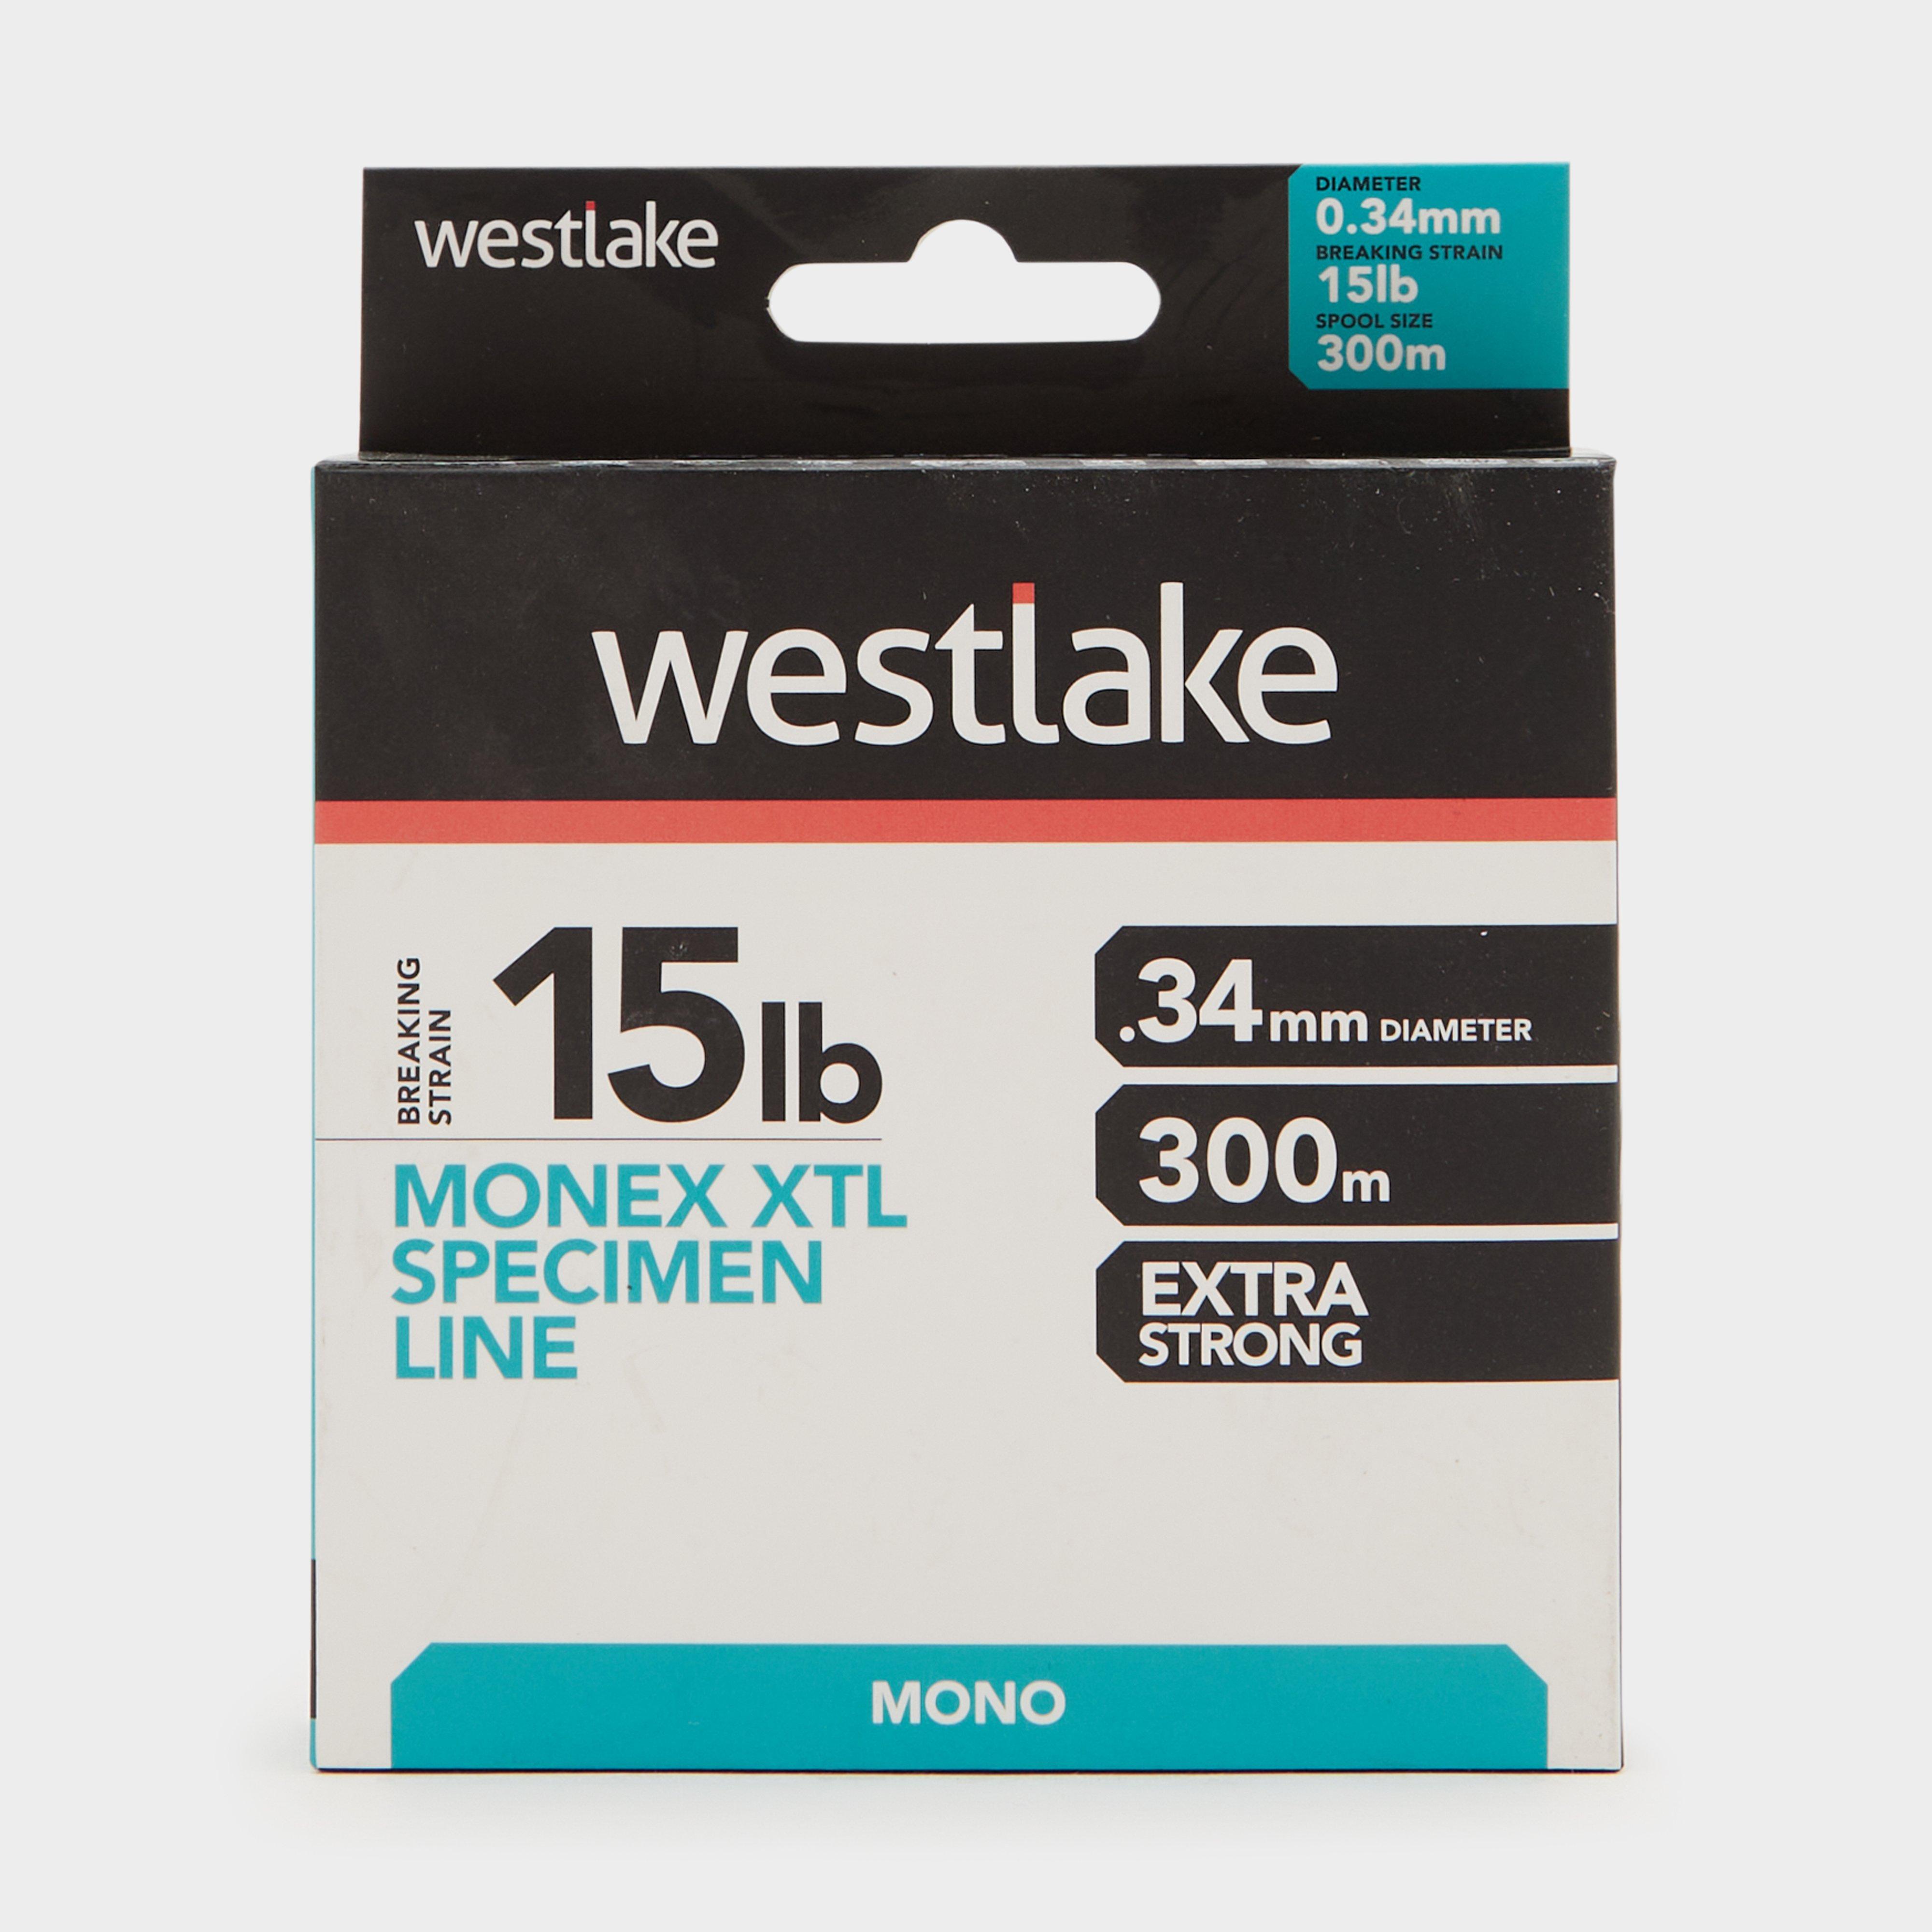 Westlake Xl Specim Mono 15lb 34mm 300m - Multi/34mm  Multi/34mm